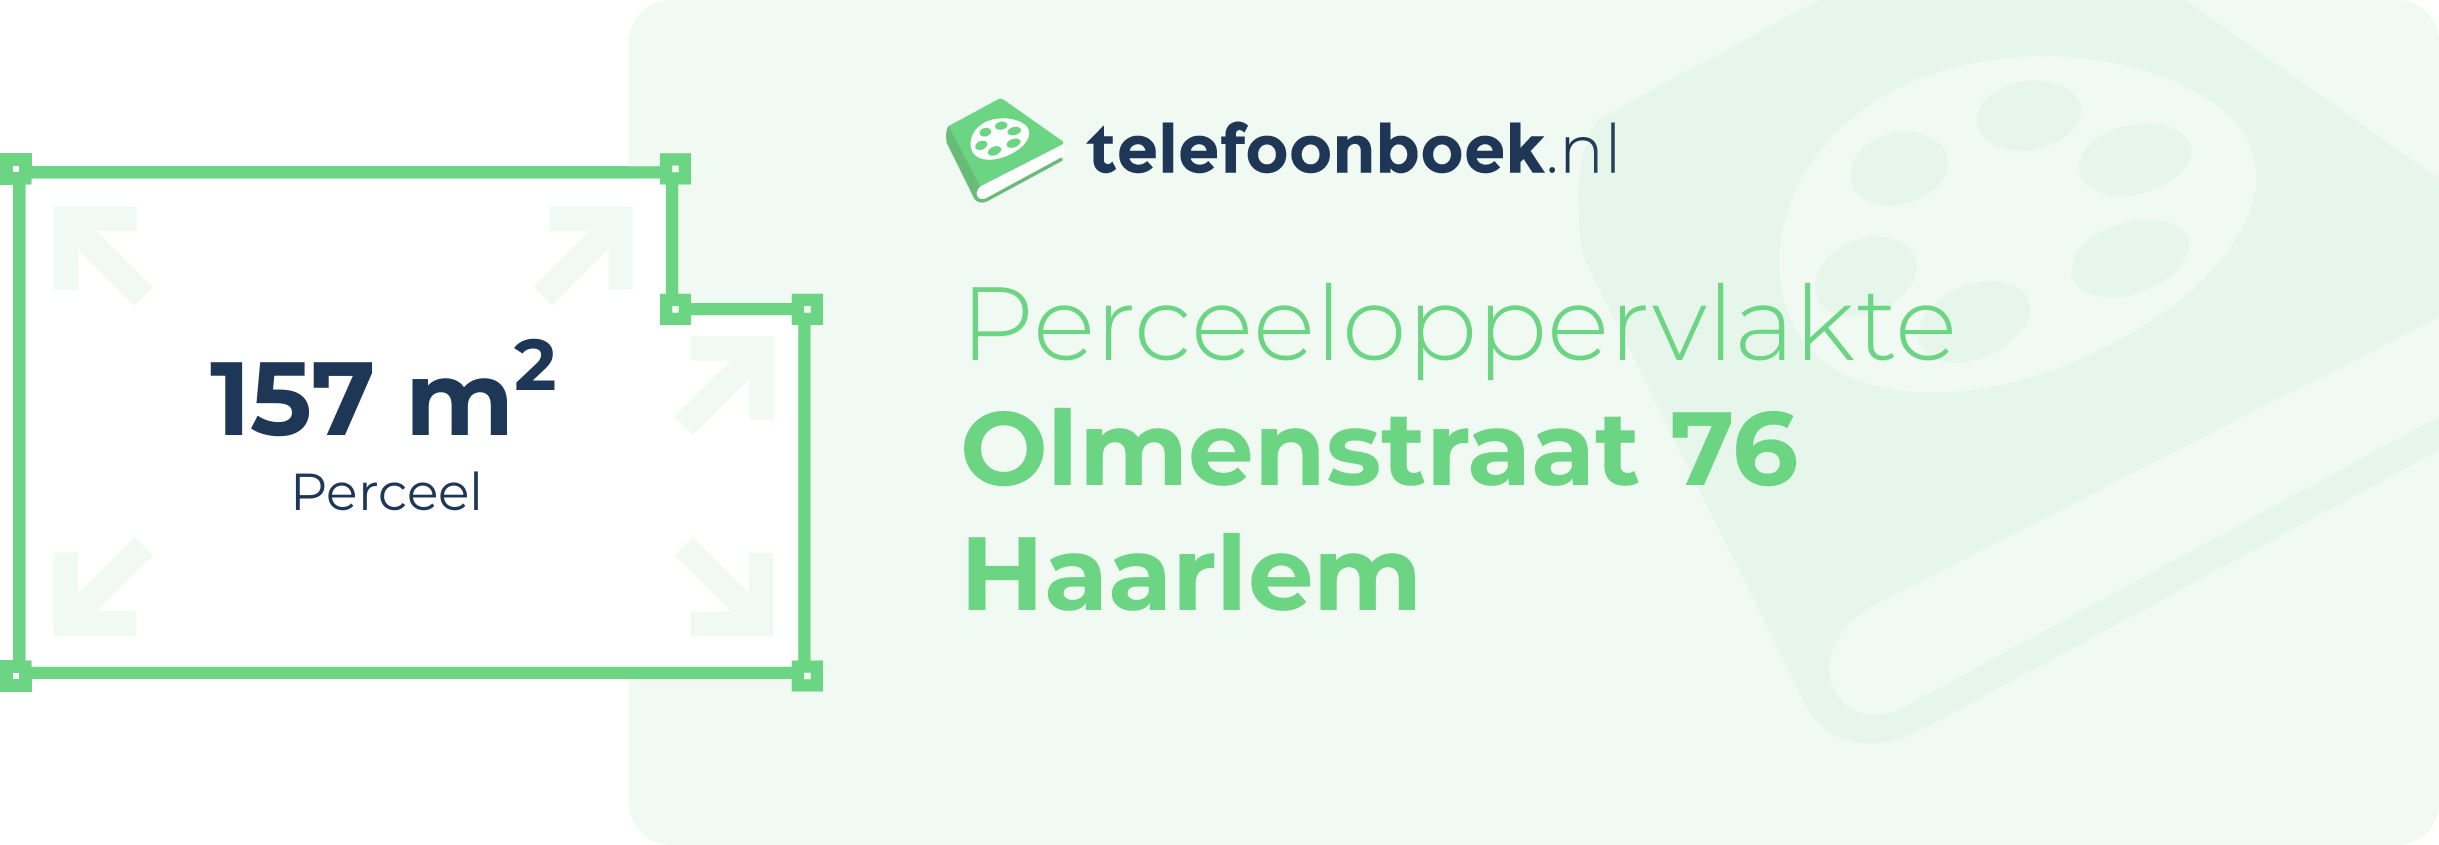 Perceeloppervlakte Olmenstraat 76 Haarlem